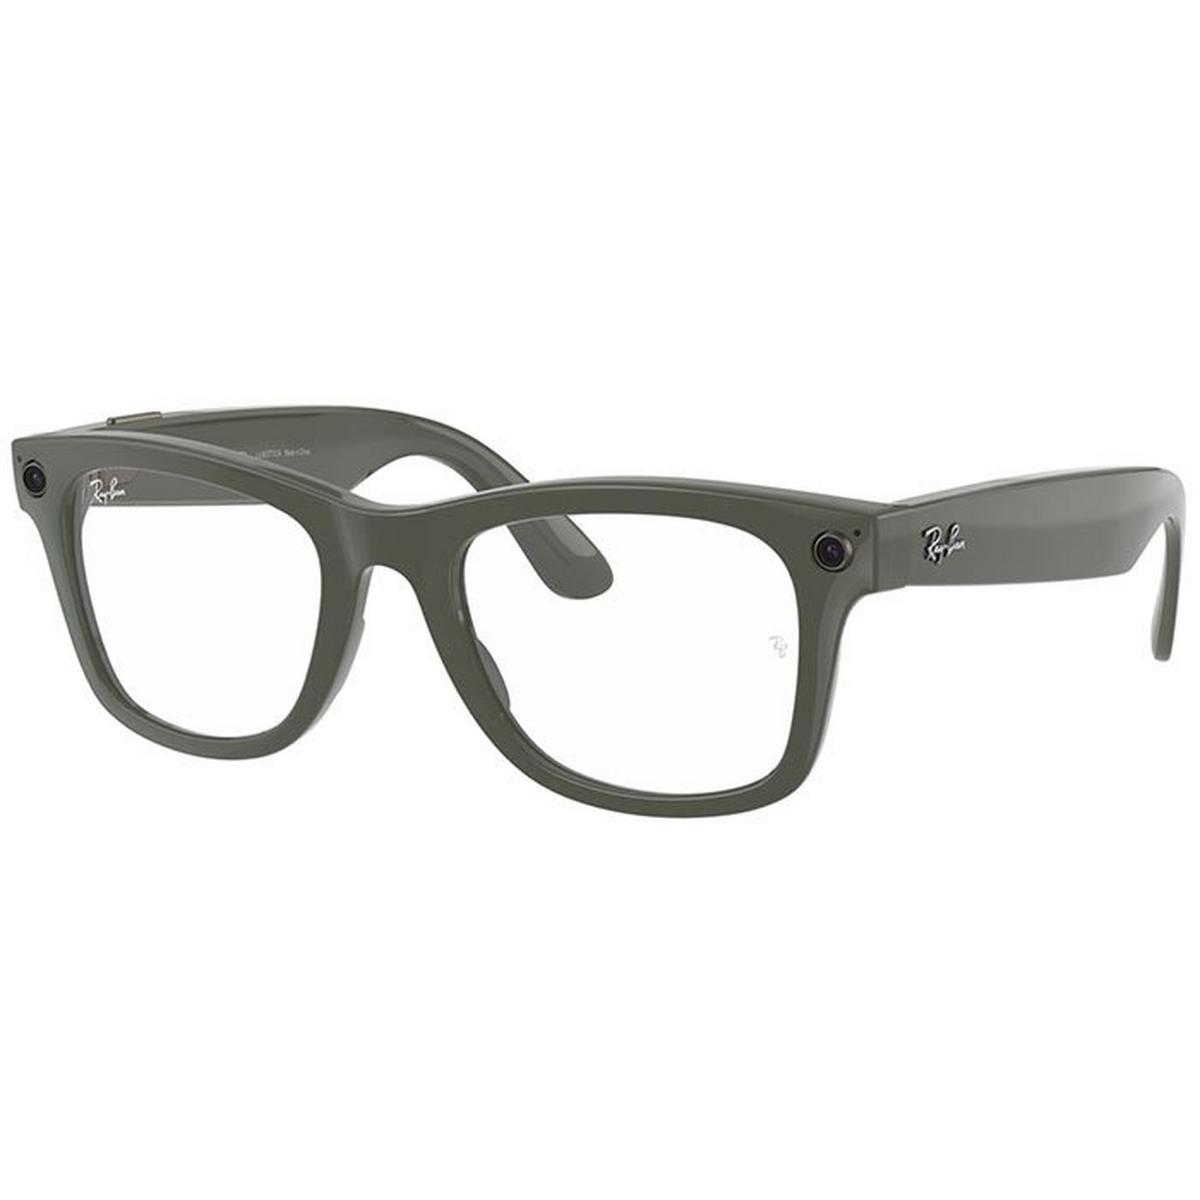 Stories Wayfarer Smart Glasses